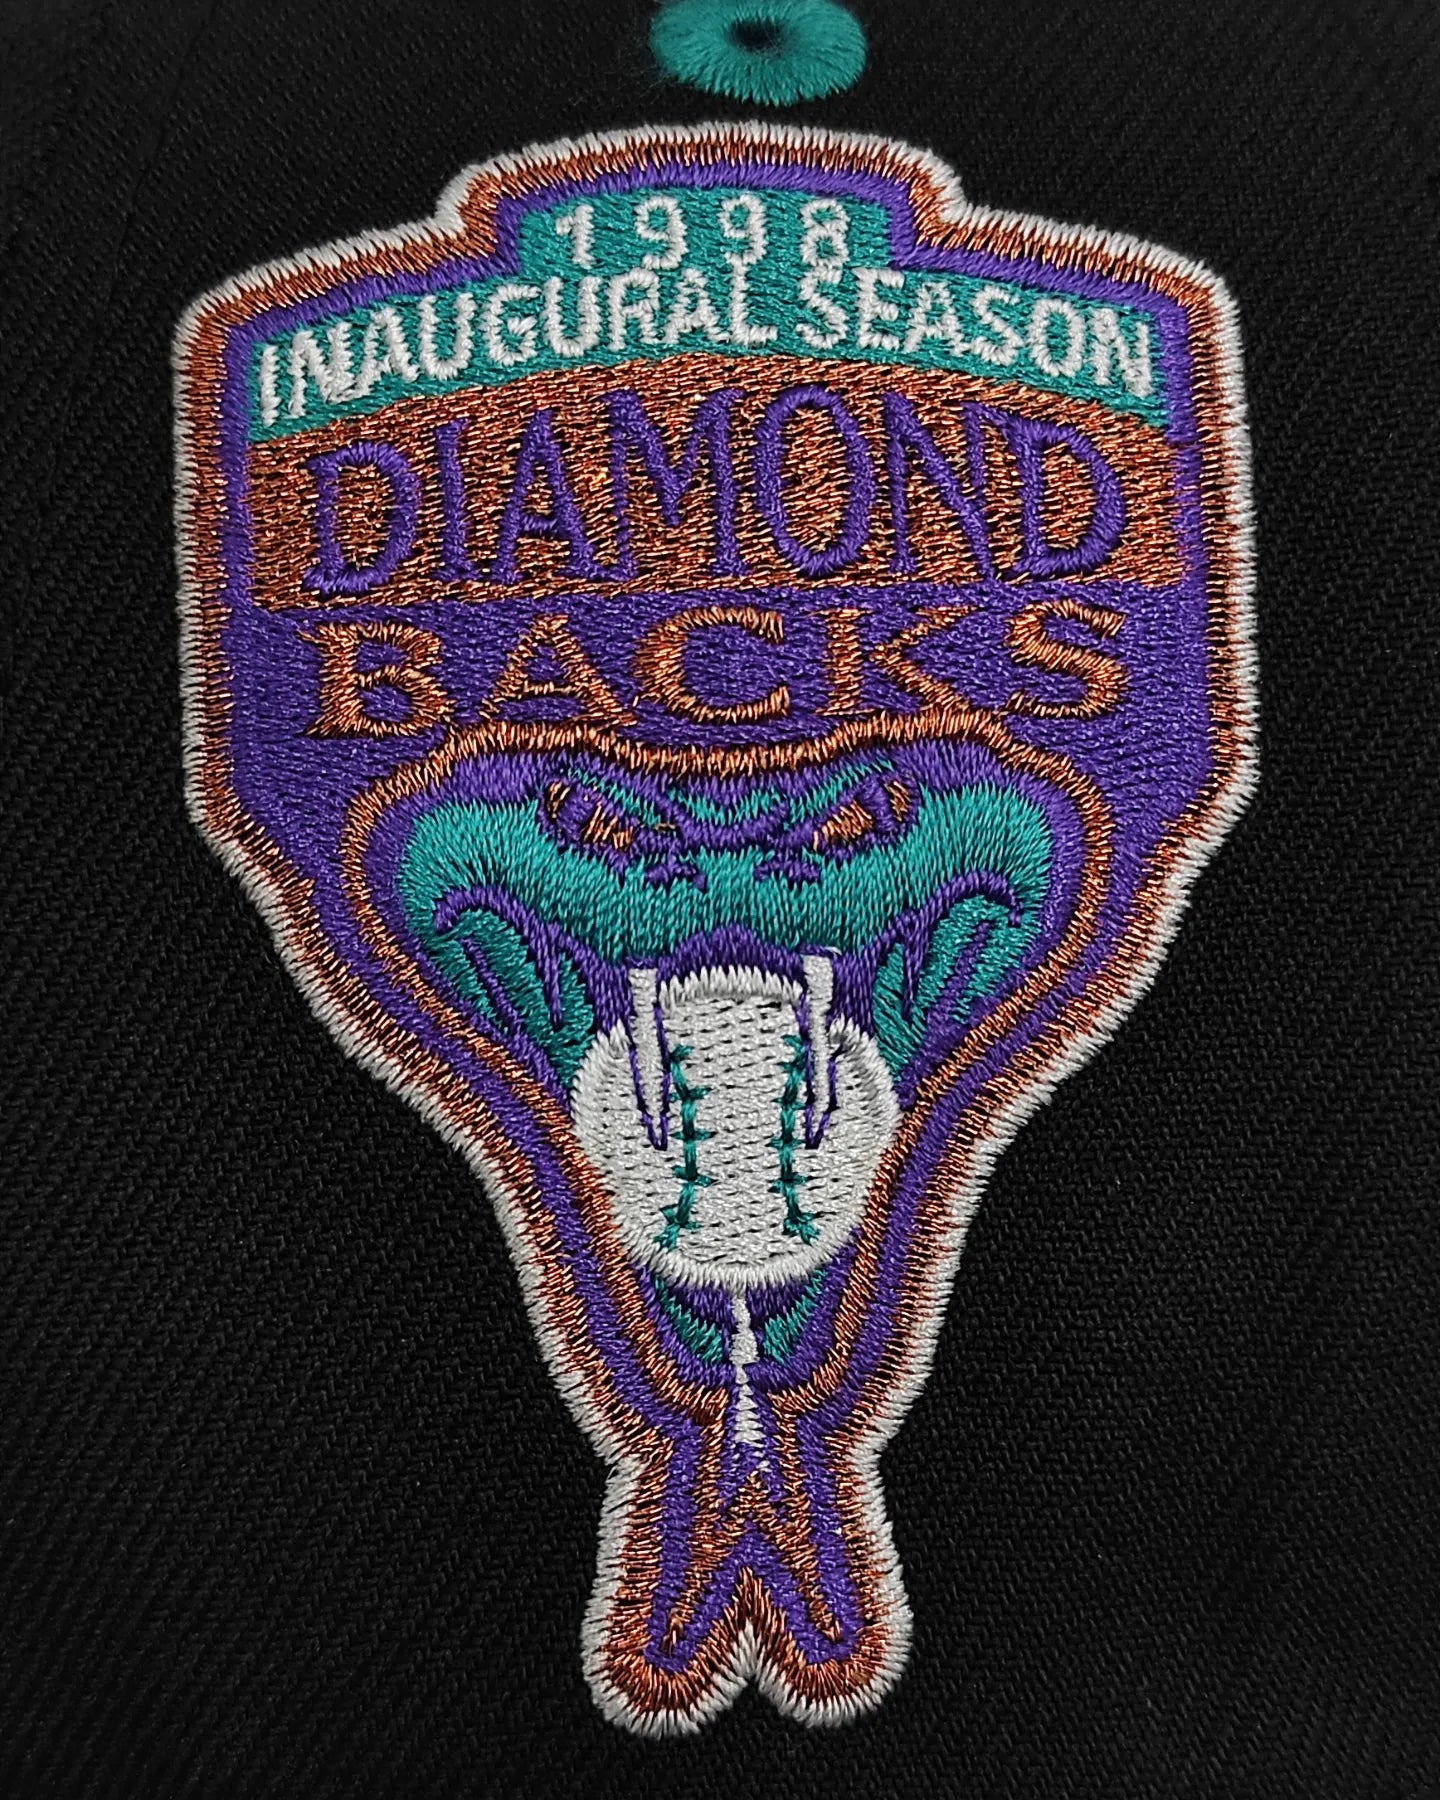 New Era 59fifty big easy Arizona Diamond 1998 inaugural season patch hat - black, tan